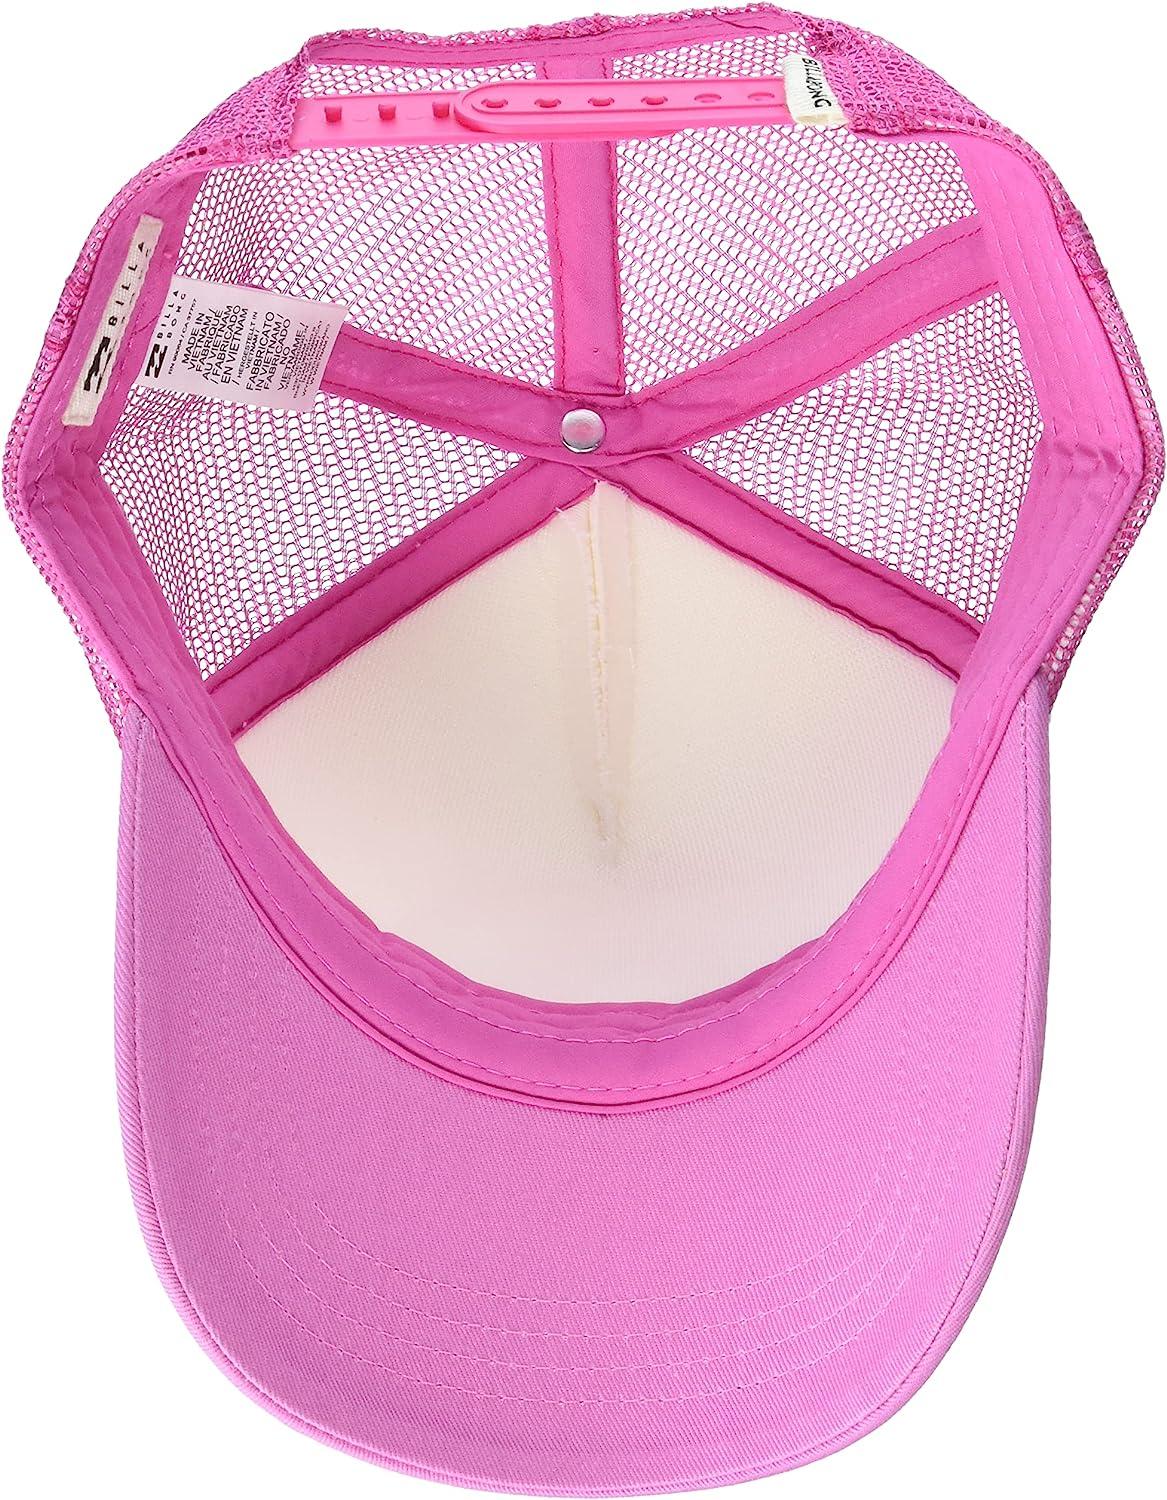 Billabong Girls' California Love Pitstop Mesh Back Adjustable Trucker Hat,  Paradise Pink, One